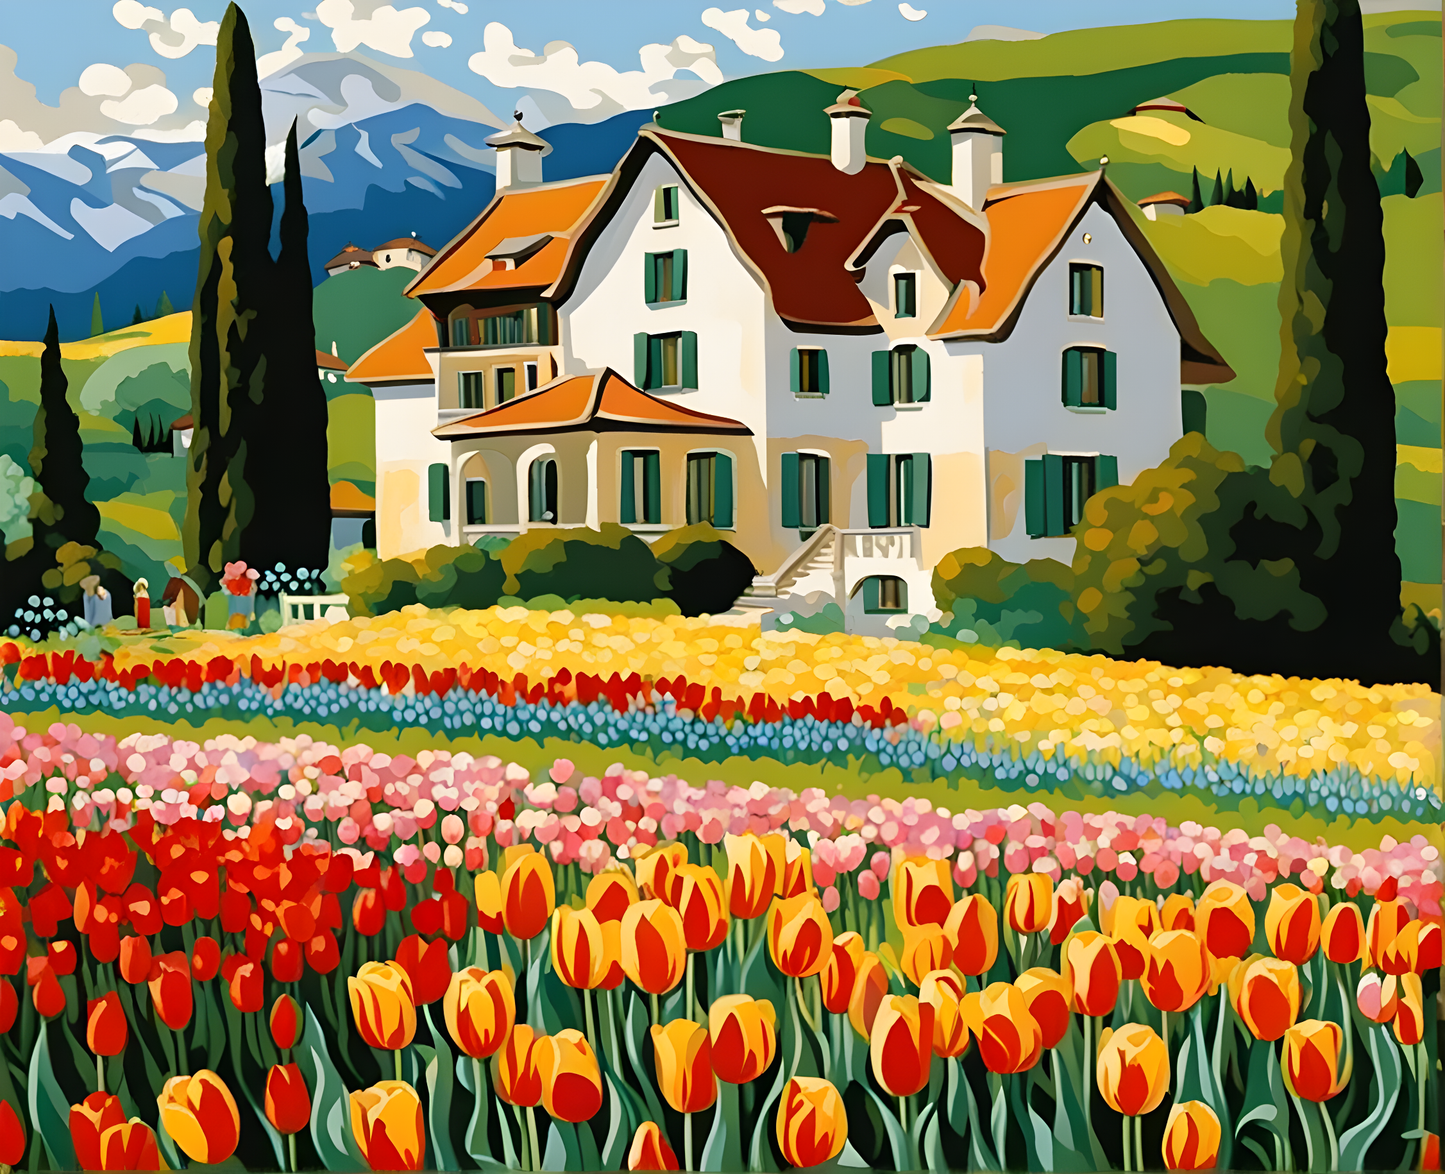 Village Villa in Tulips Field - Van-Go Paint-By-Number Kit